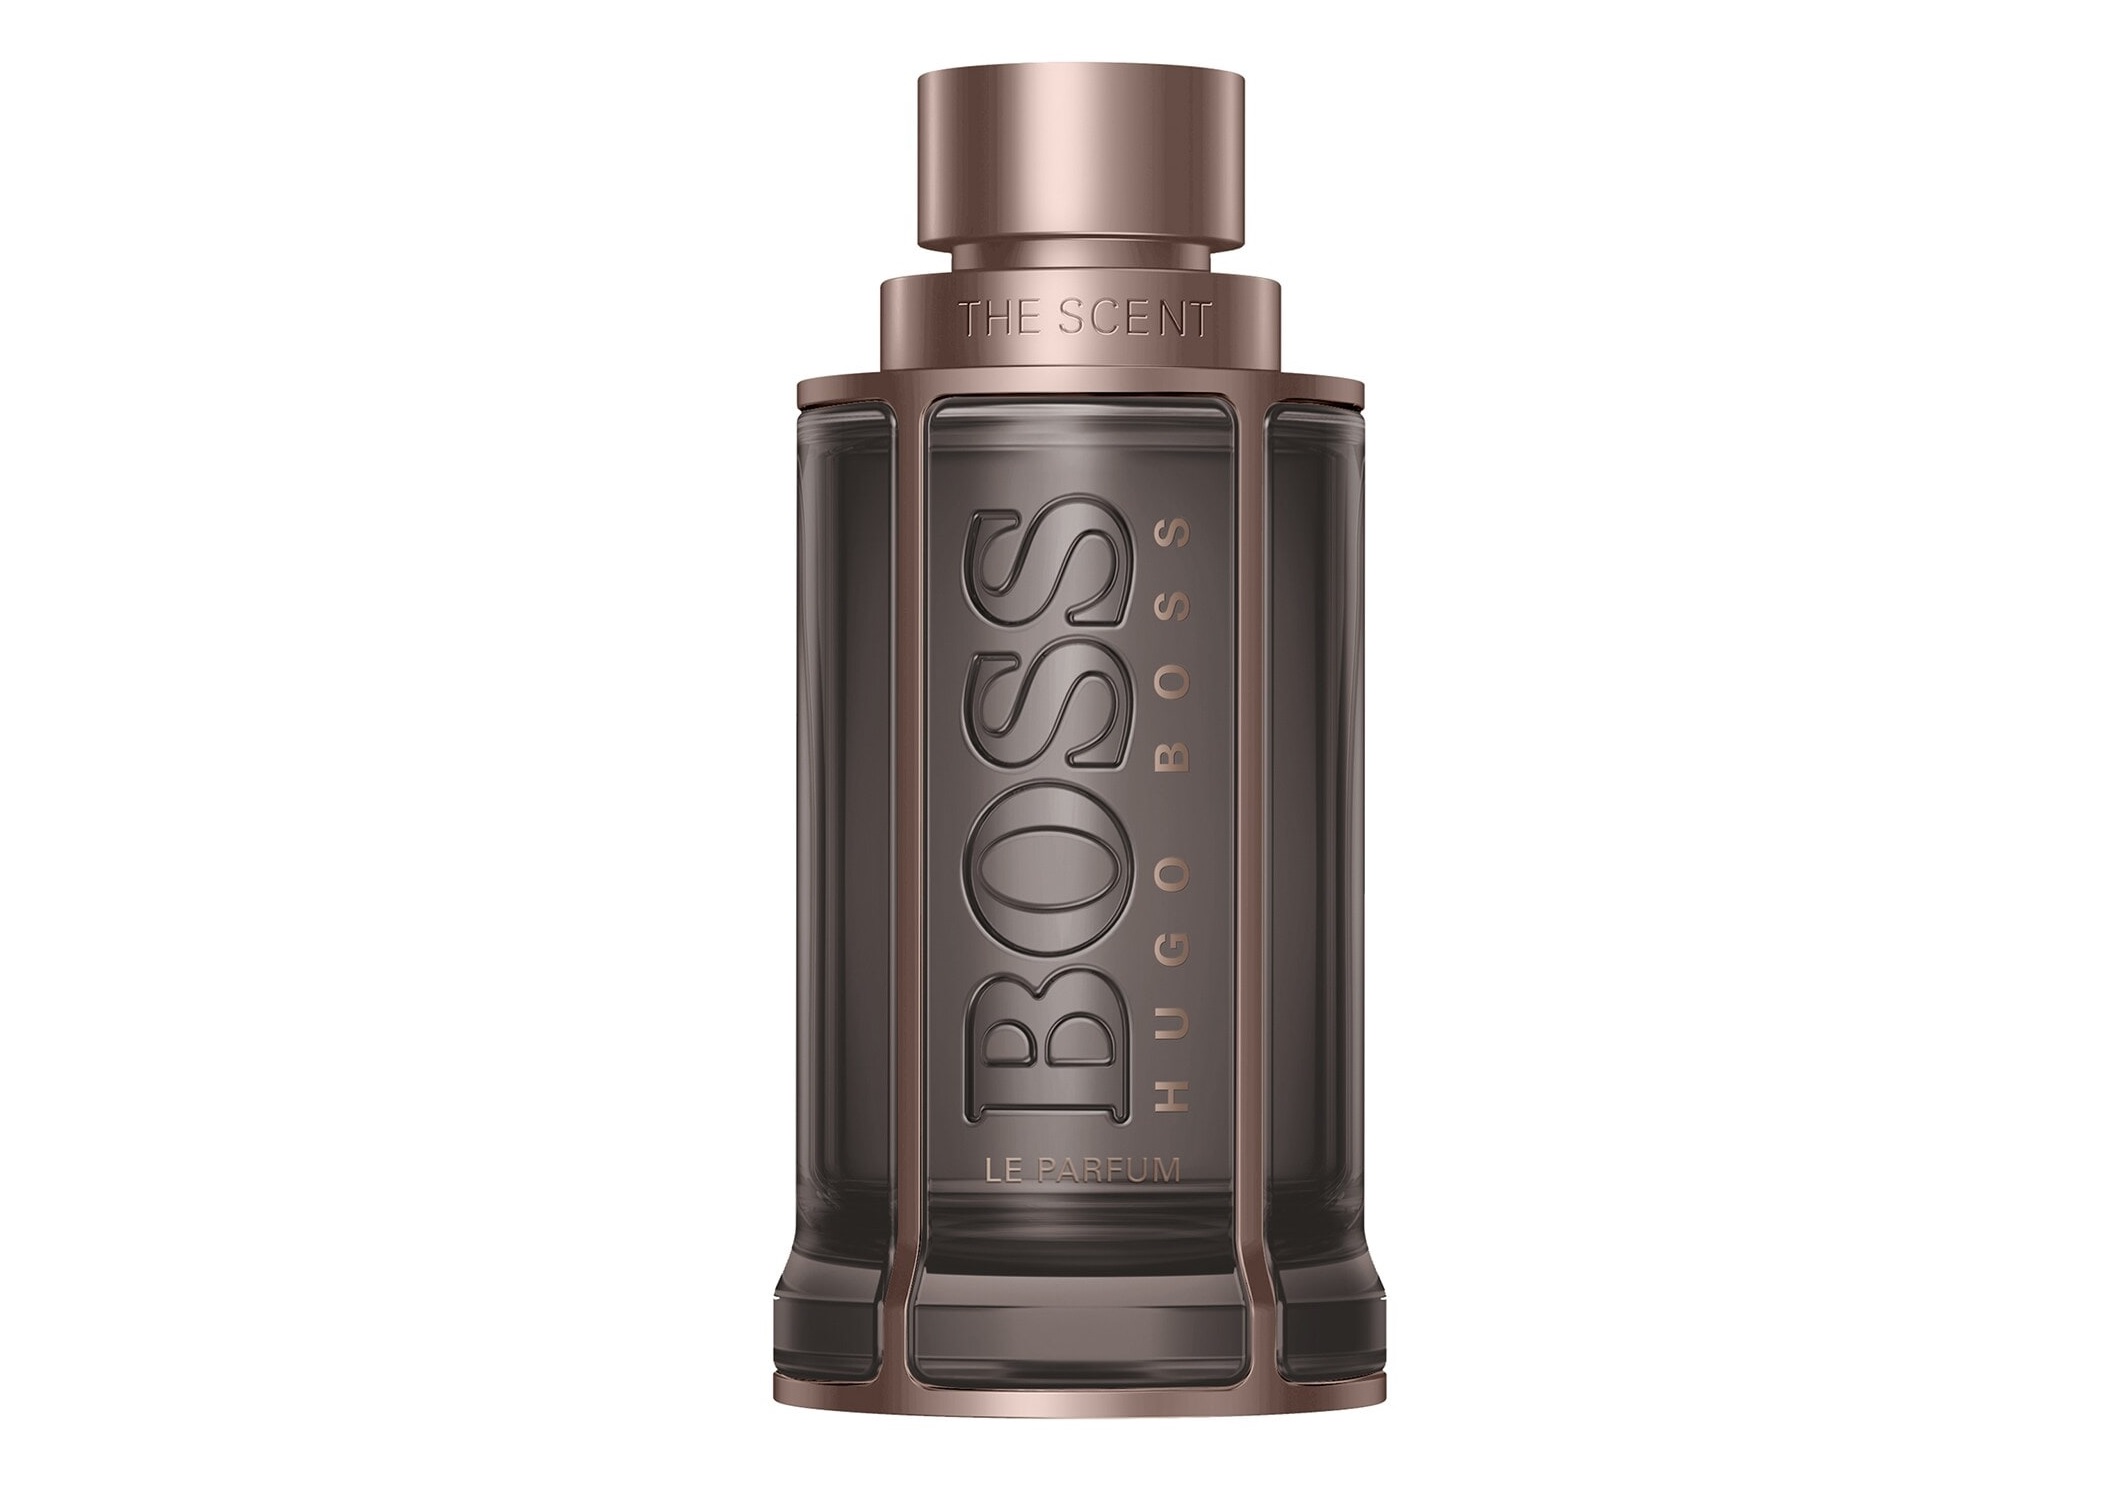 Hugo Boss The Scent Le Parfum for Him (for Men)